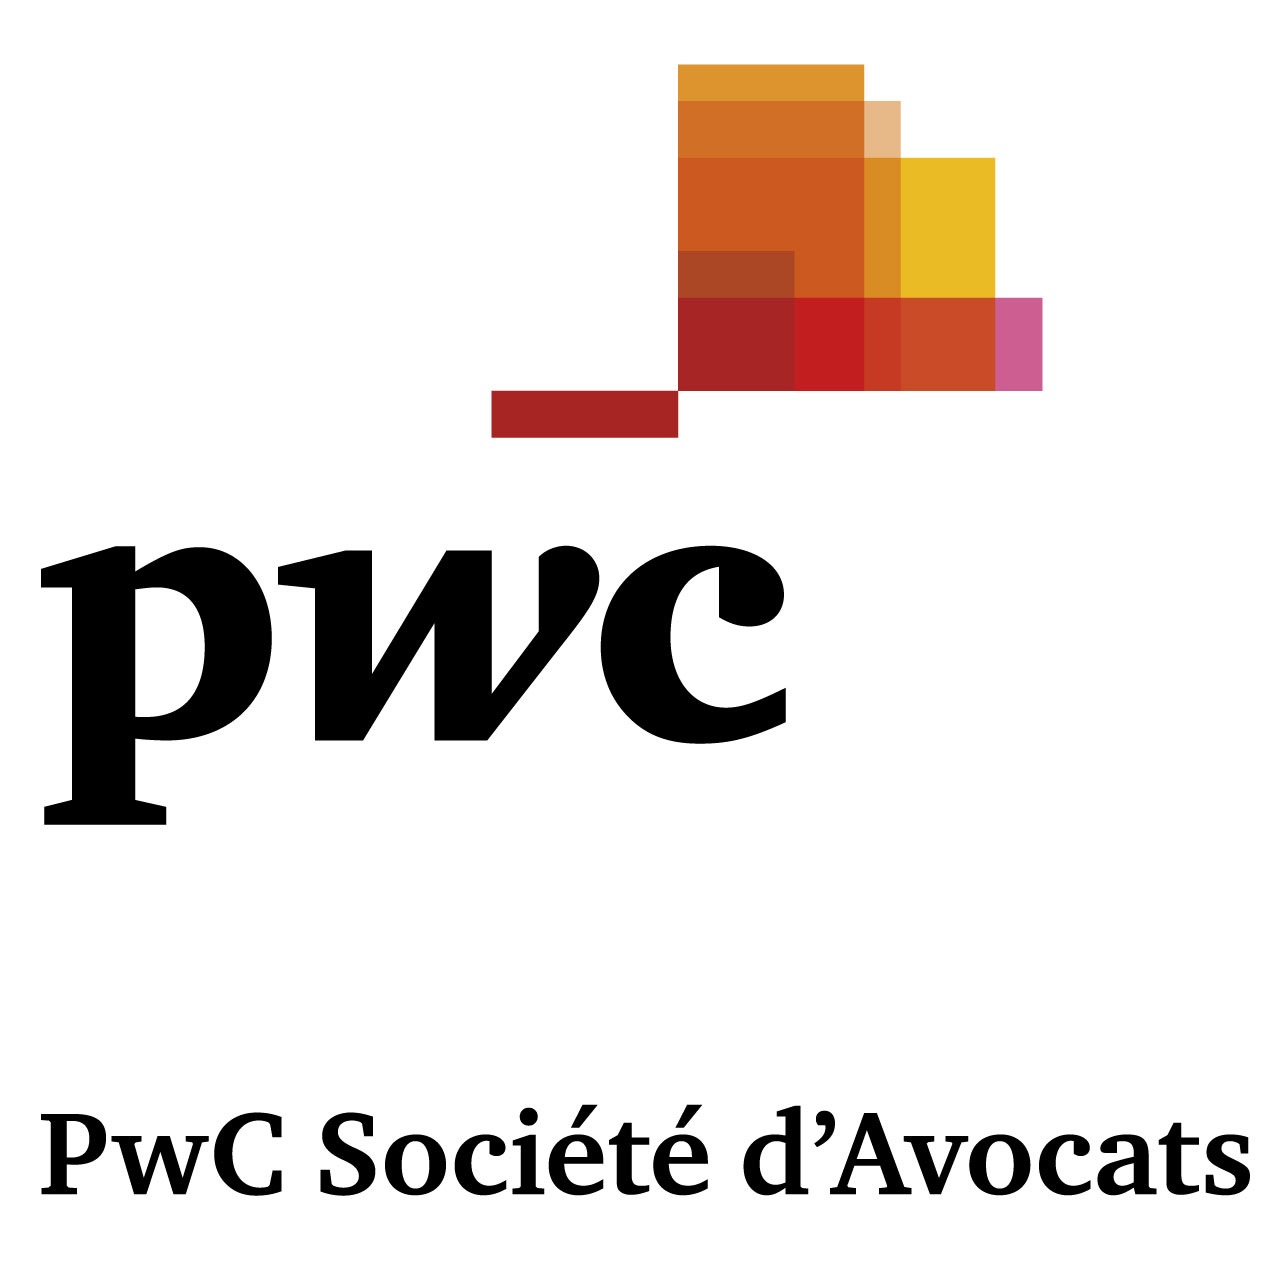 the PwC Société dAvocats logo.